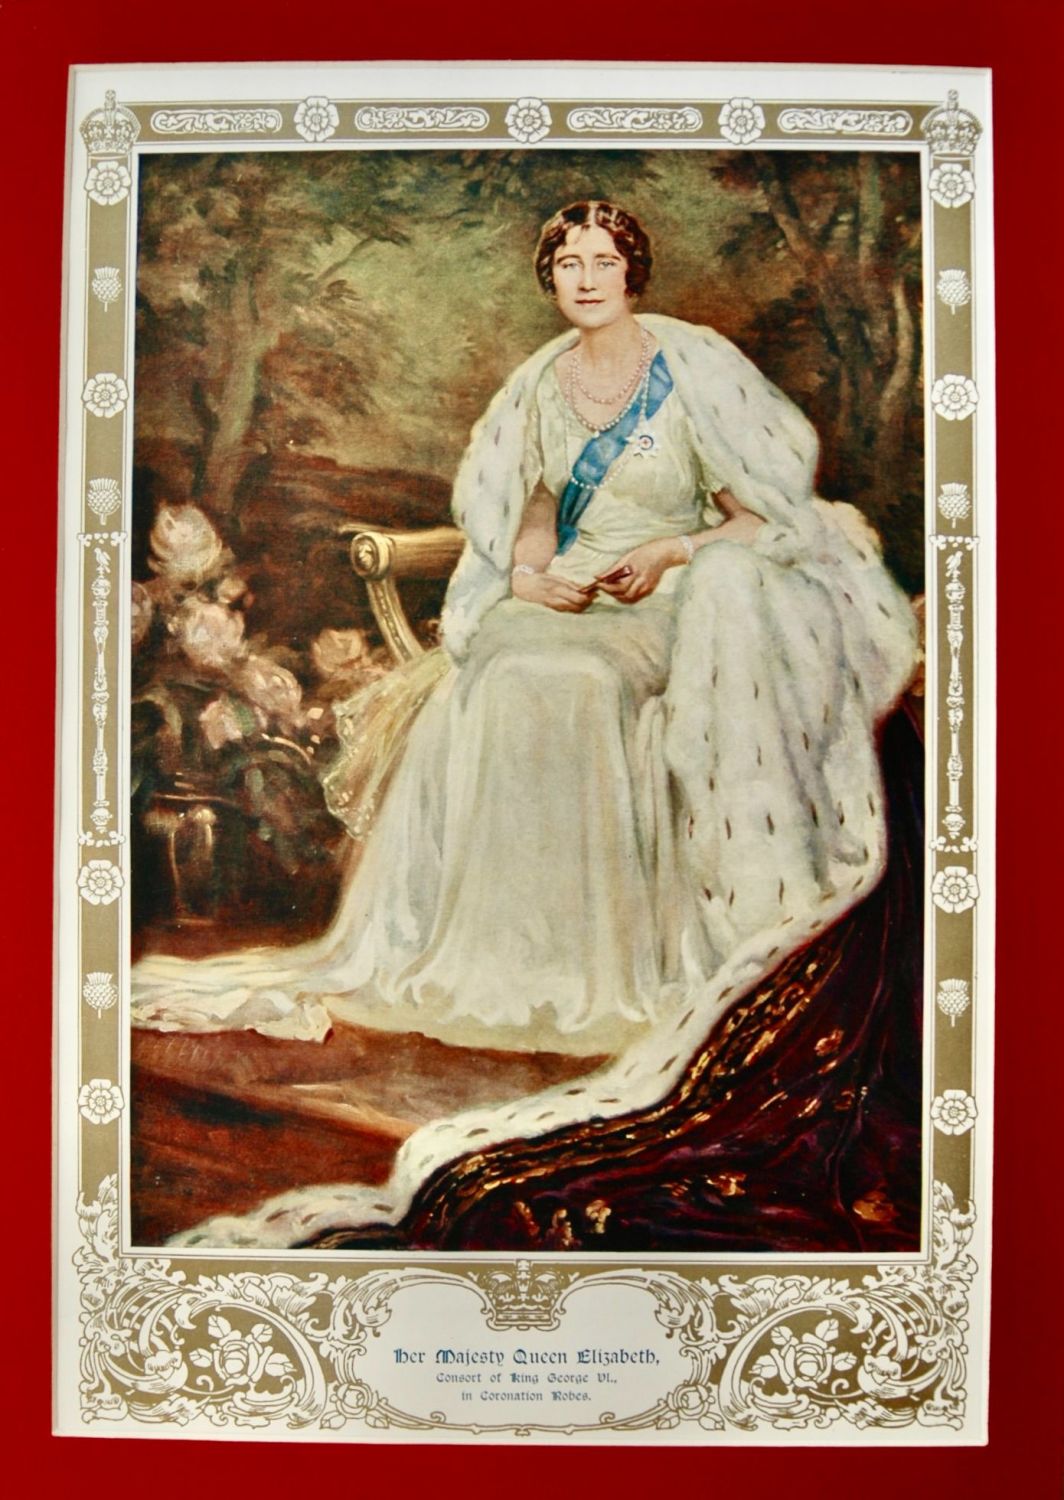 Her Majesty Queen Elizabeth, Consort of King George VI., in Coronation Robe